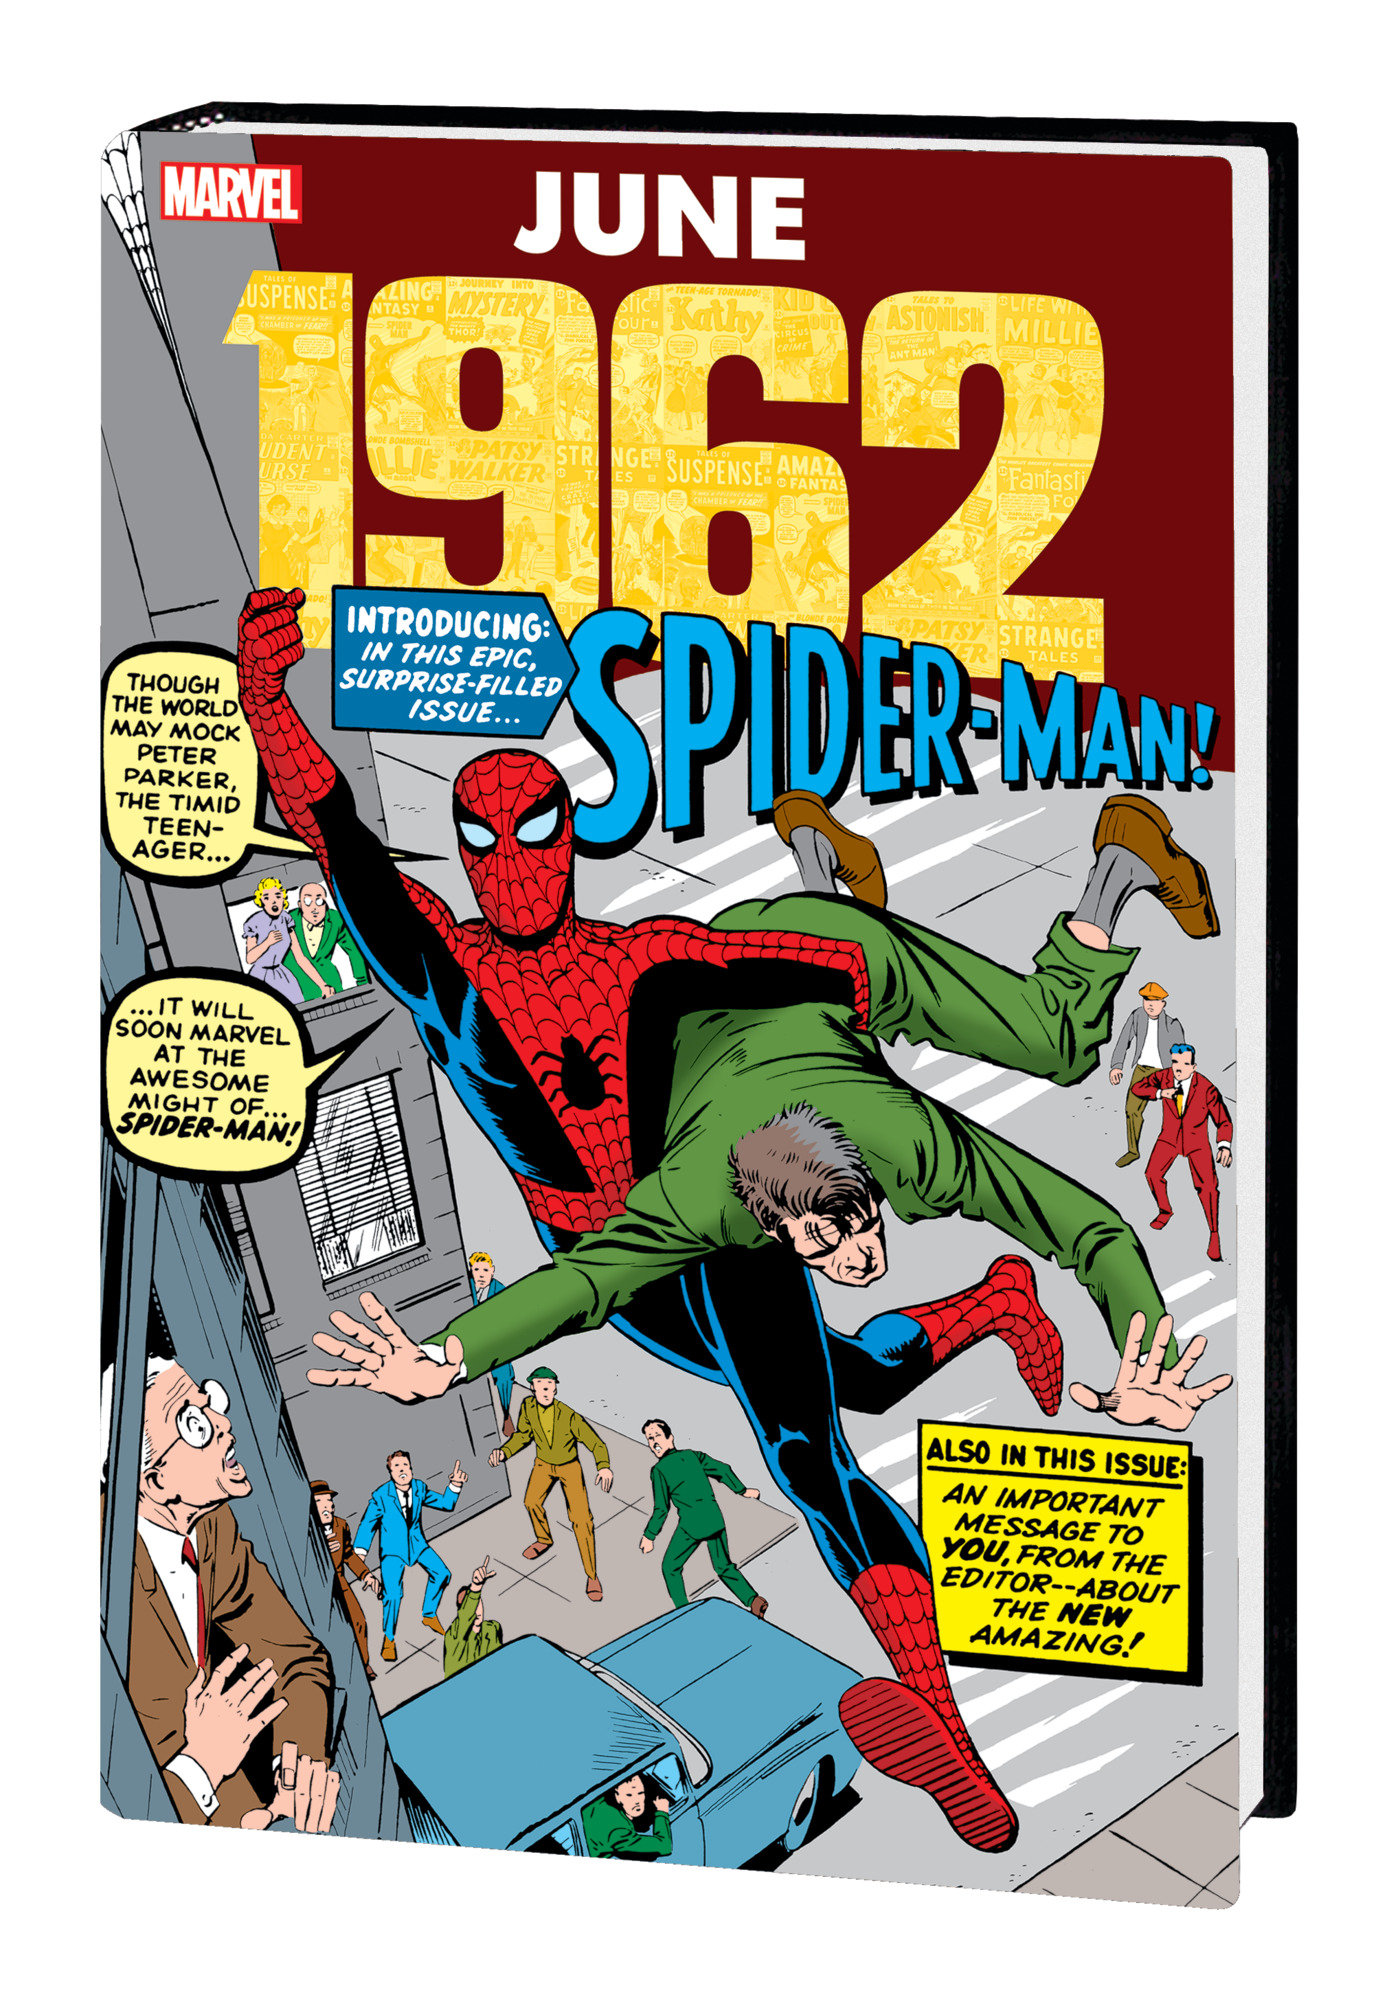 Marvel June 1962 Omnibus Hardcover Ditko Direct Market Edition